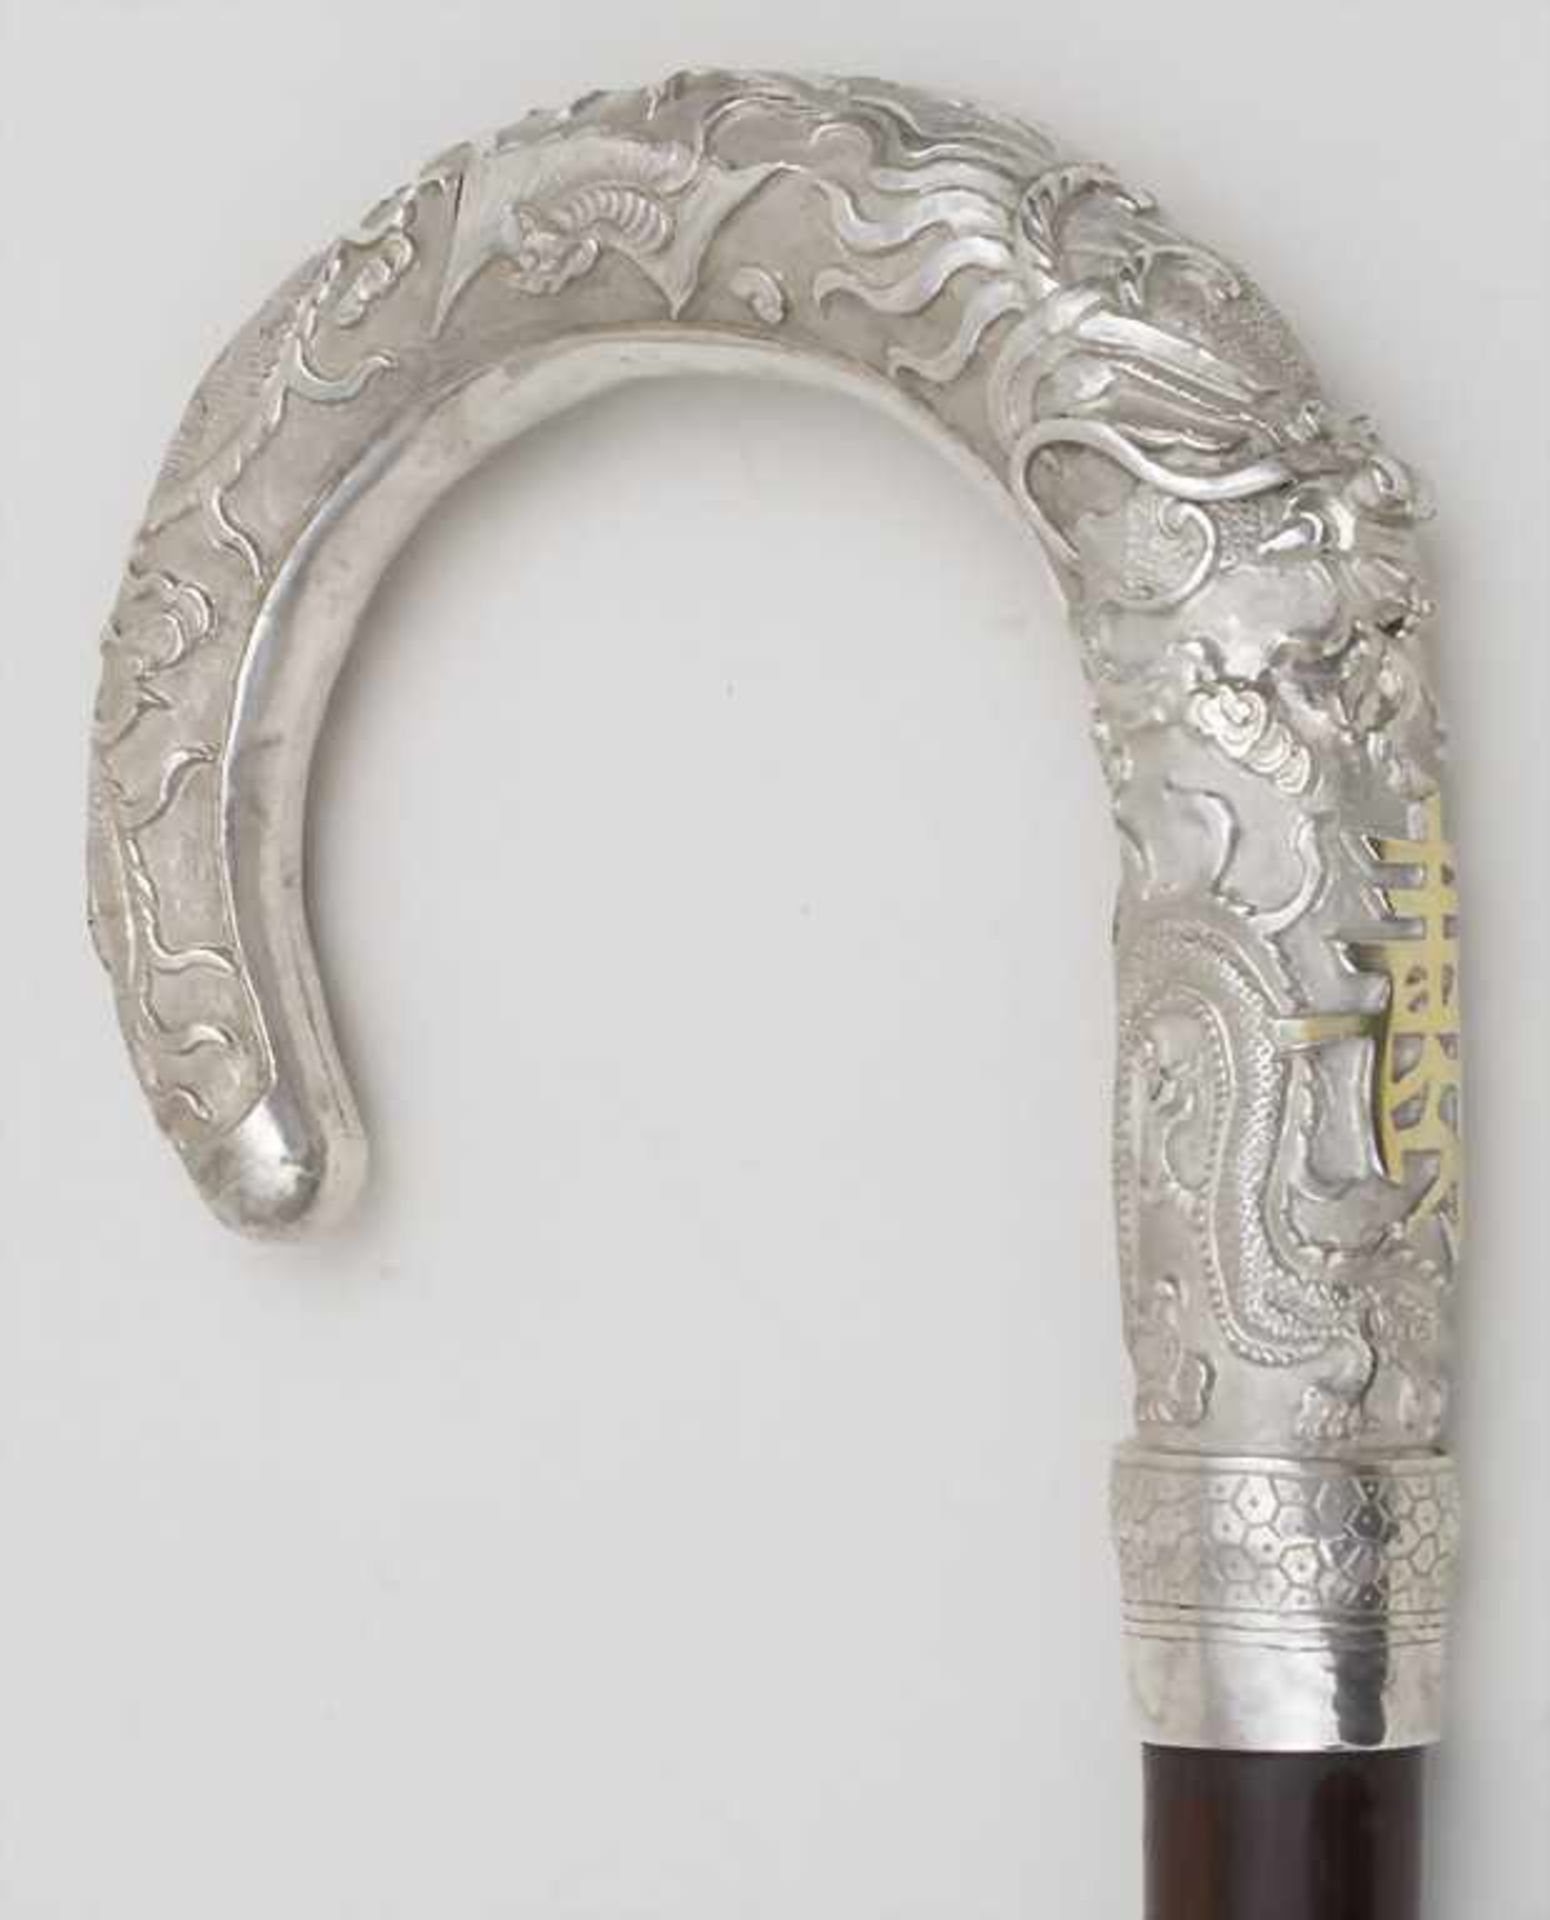 Gehstock mit Drachenmotiv / A cane with dragon handle, China (Hong Kong), um 1900Material: Silber - Bild 4 aus 7